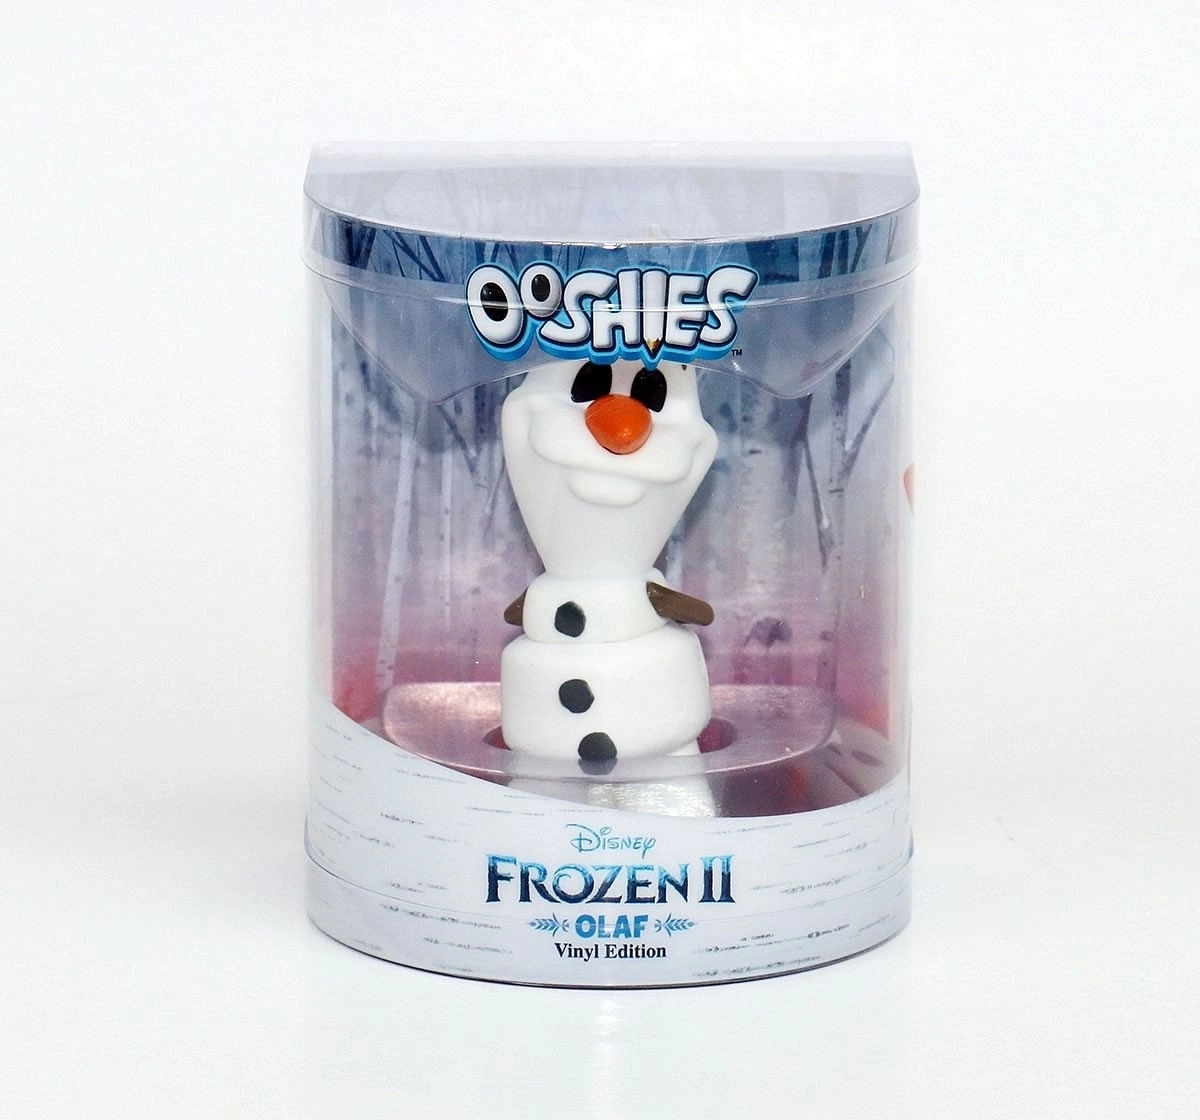 Frozen II Ooshies 4" Vinyl Edition for Kids age 3Y+ (Assorted)